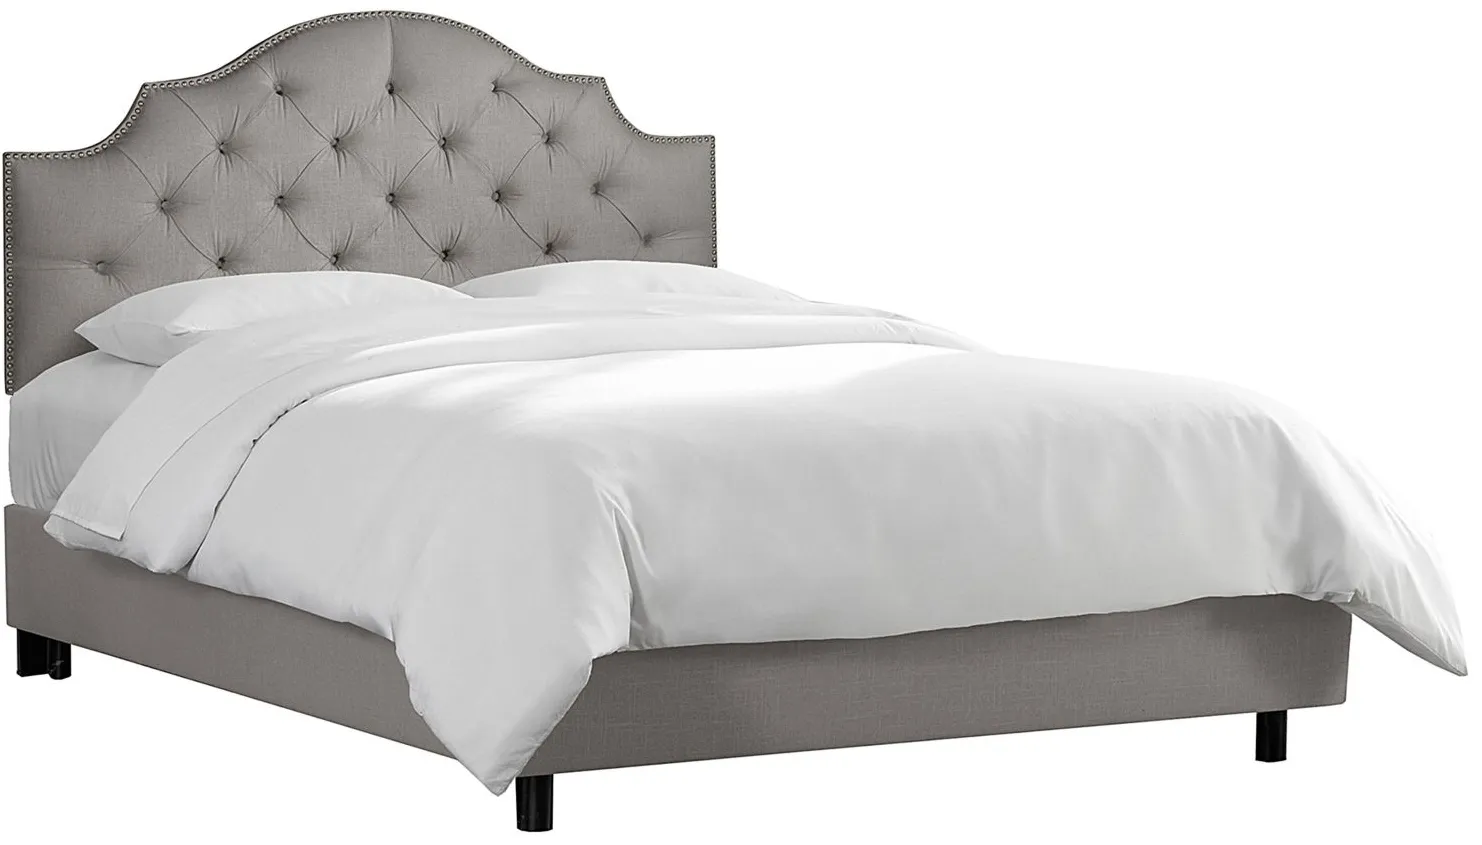 Amara Bed in Linen Gray by Skyline